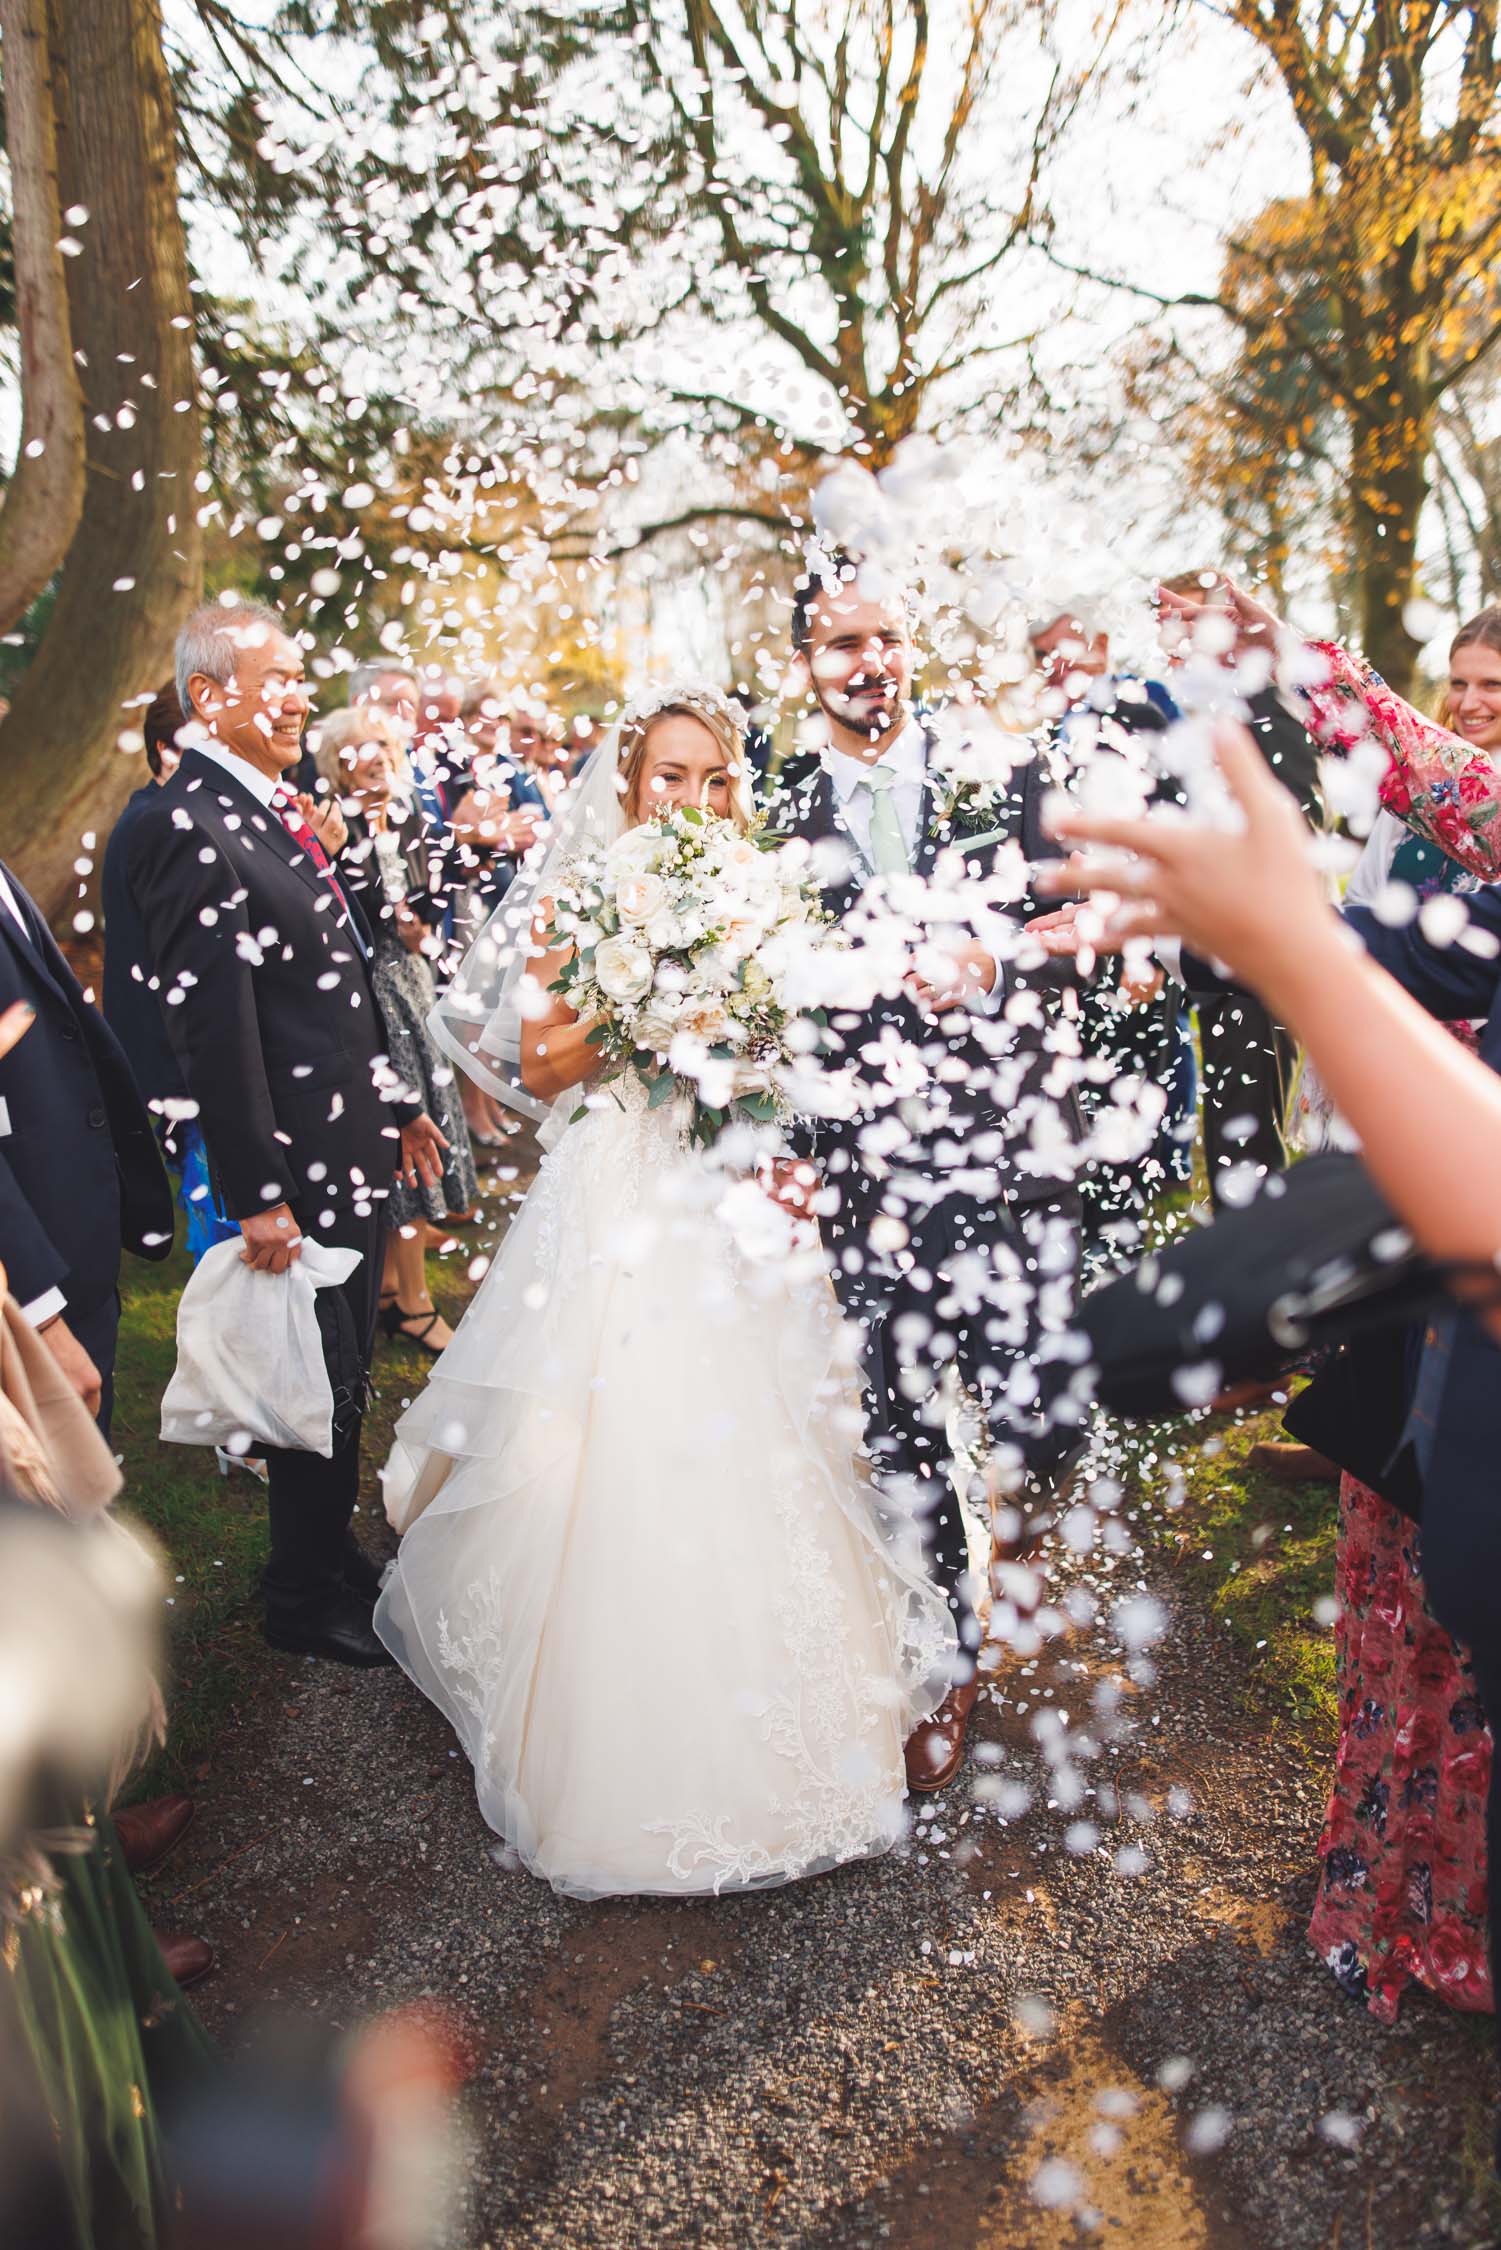 Wedding Photographer in Herefordshire, The West Midlands, United Kingdom.